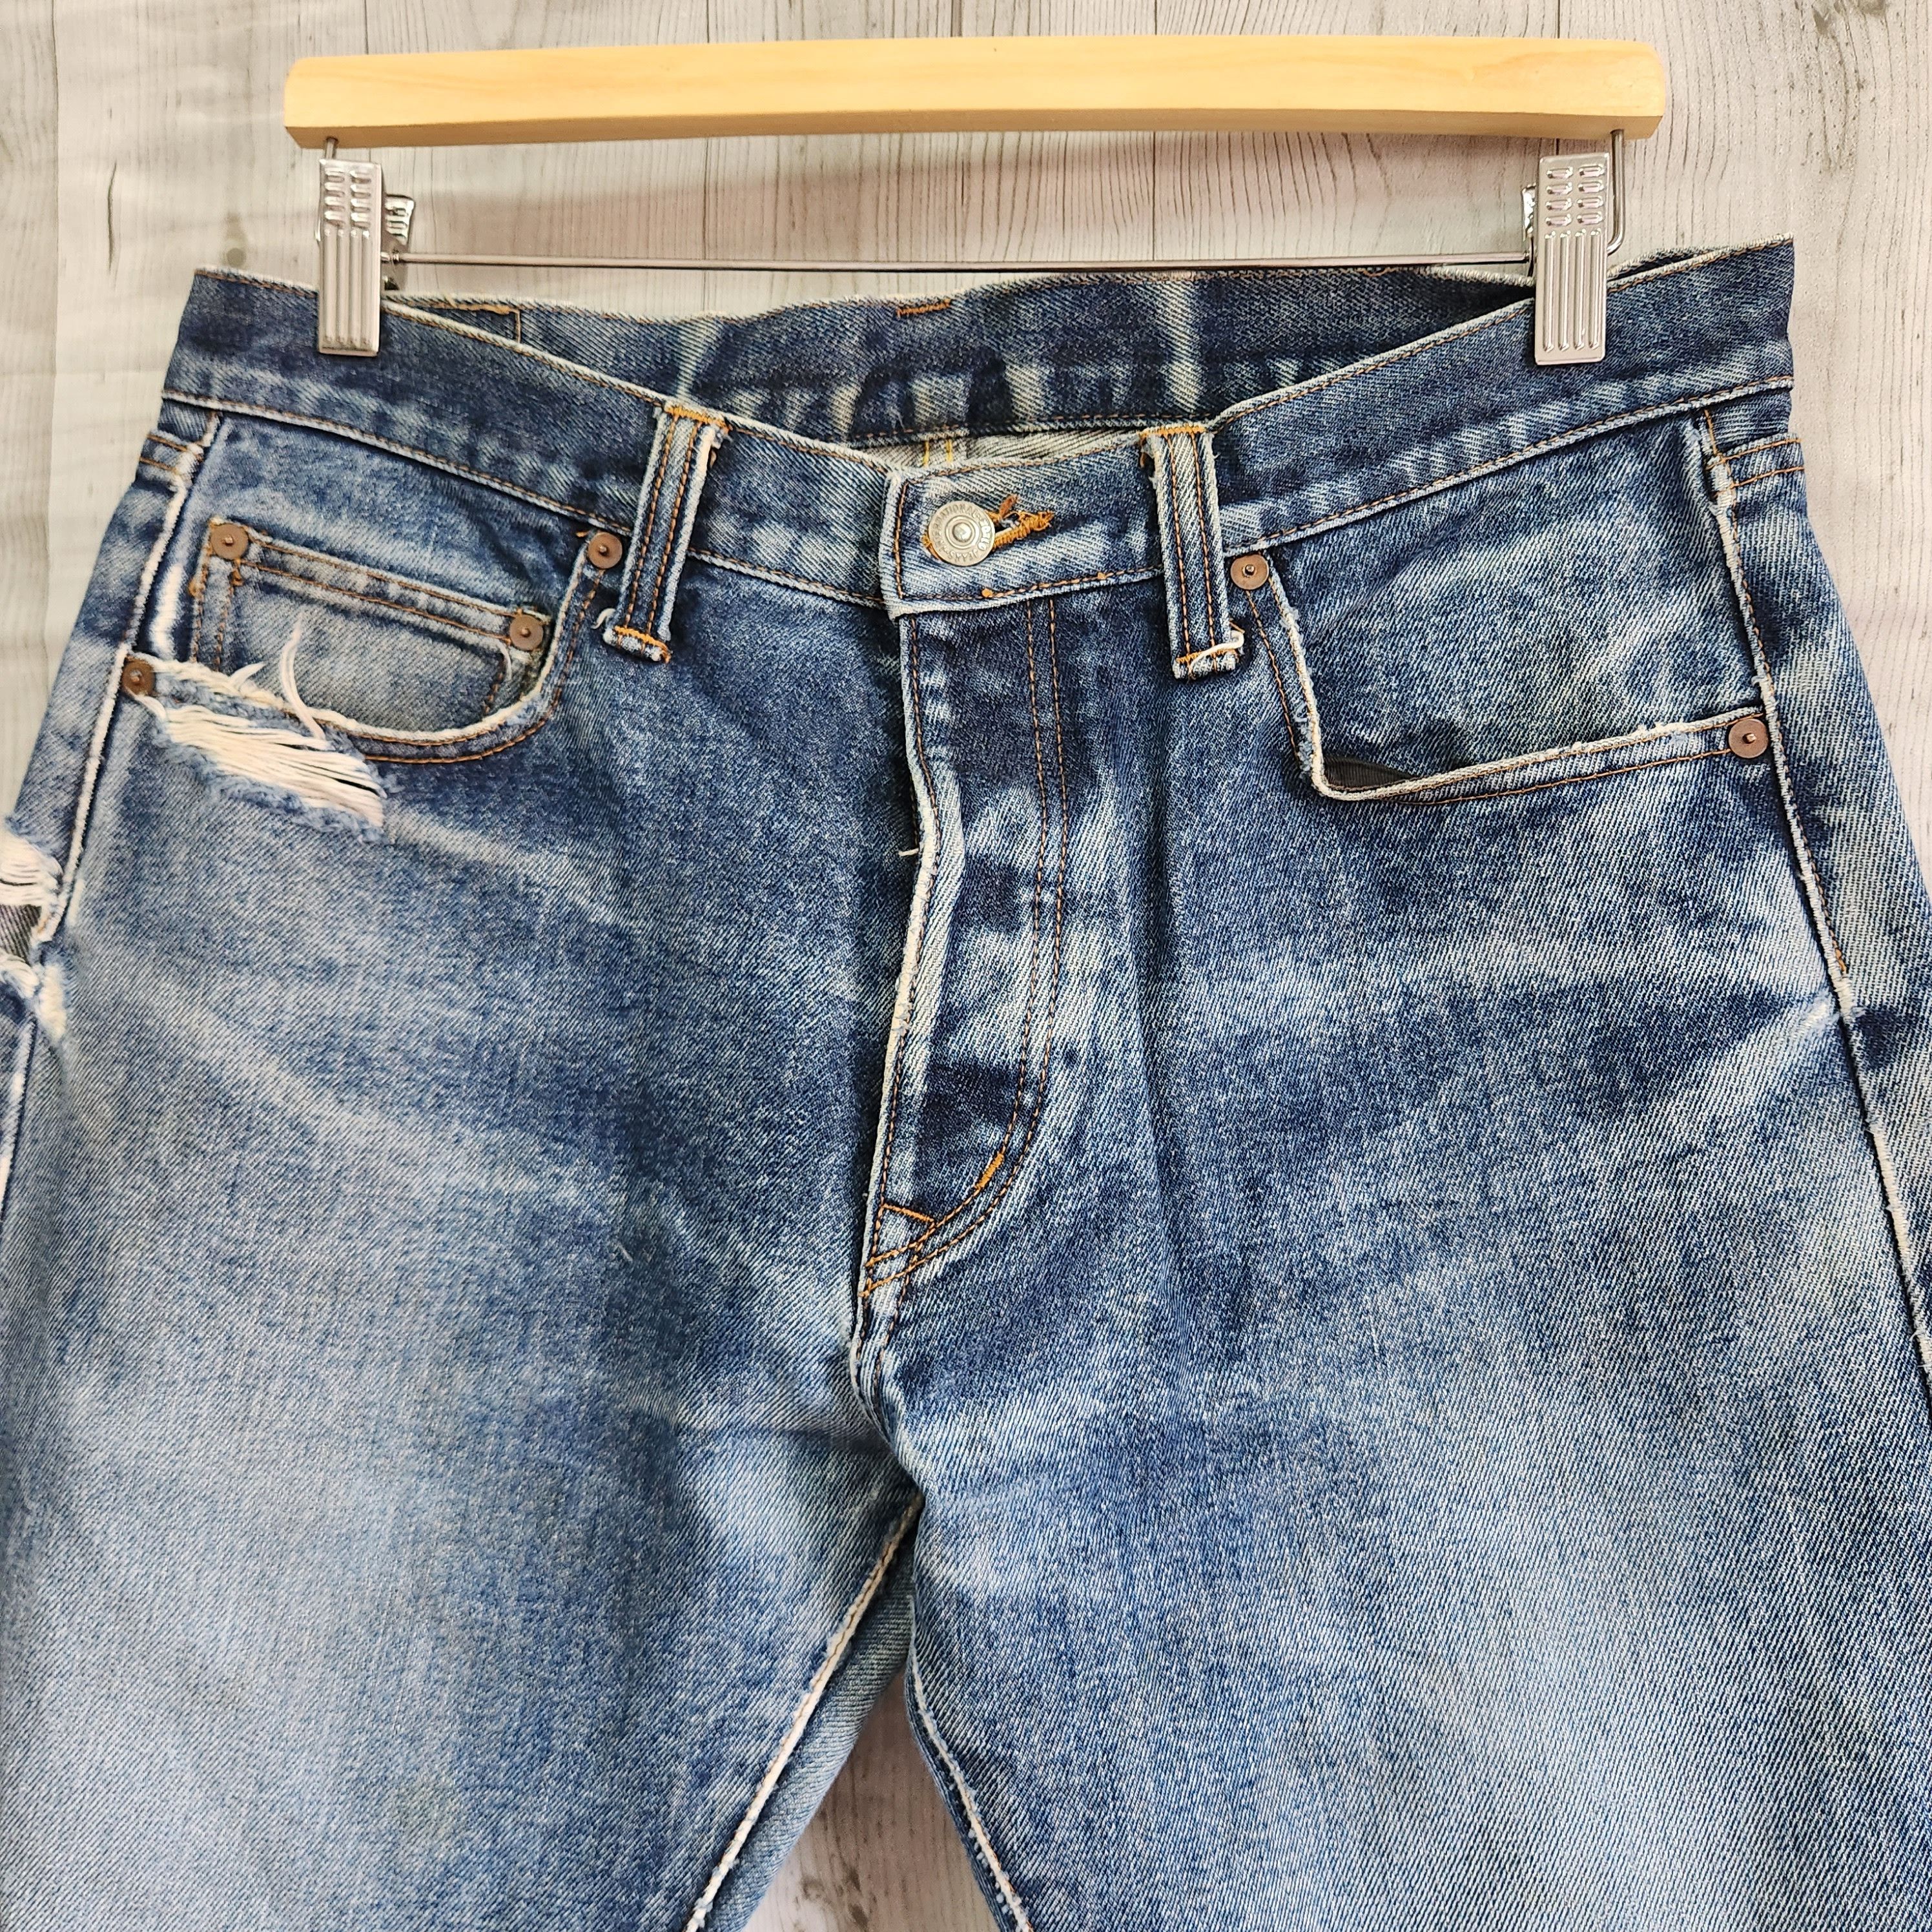 Japan Blue - Kojima Genes Japan Vintage Denim Blue Jeans Ripped - 20